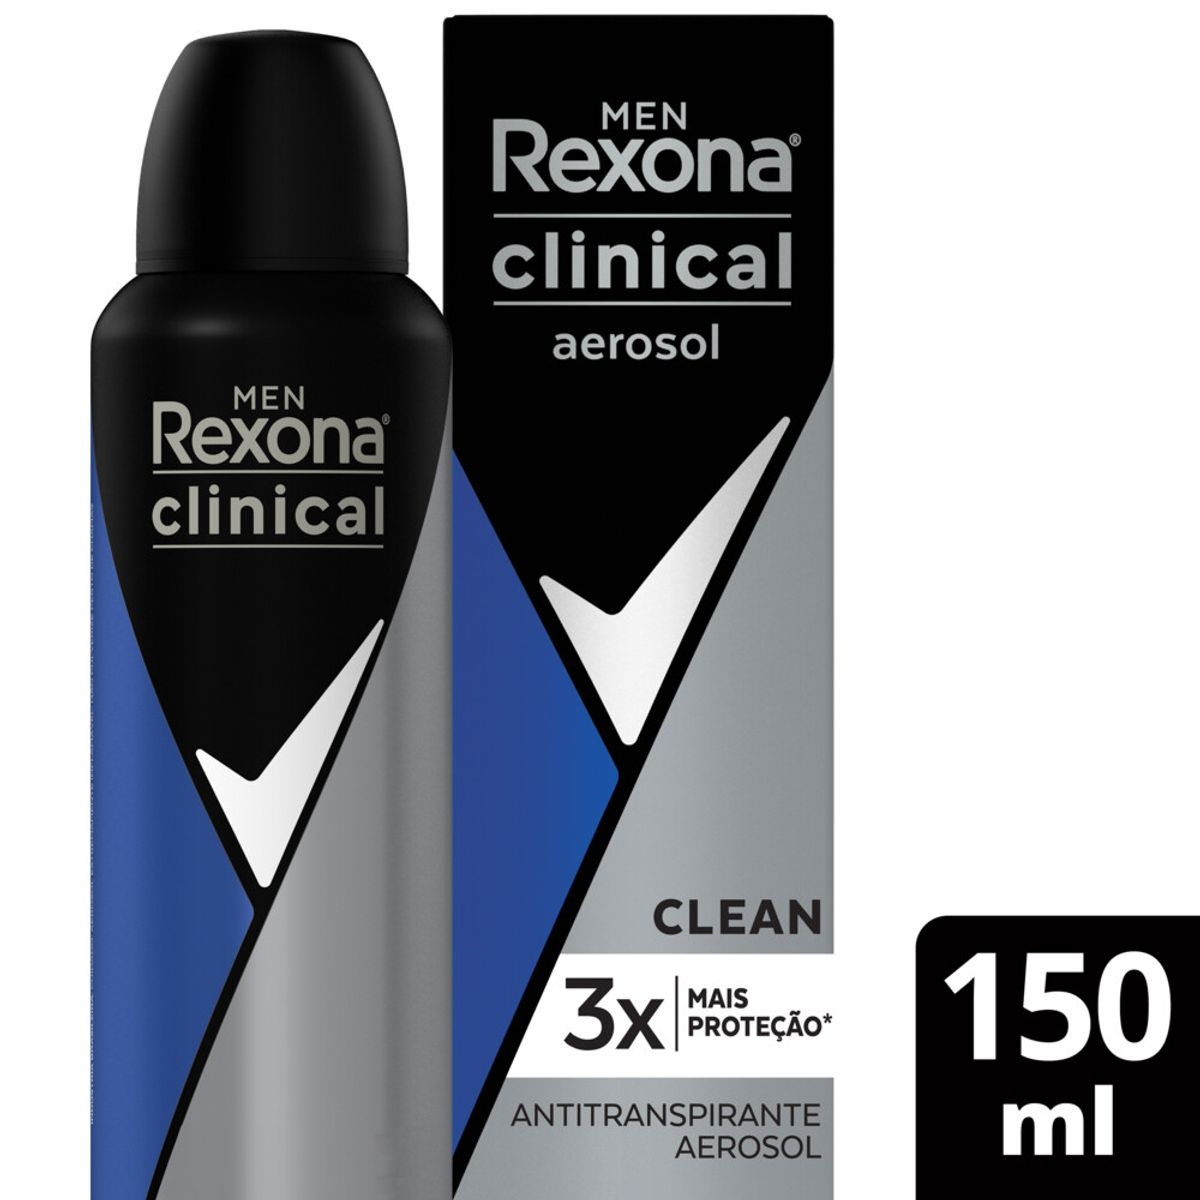 Rexona Clinical Clean Men Antiperspirant Deodorant 48g